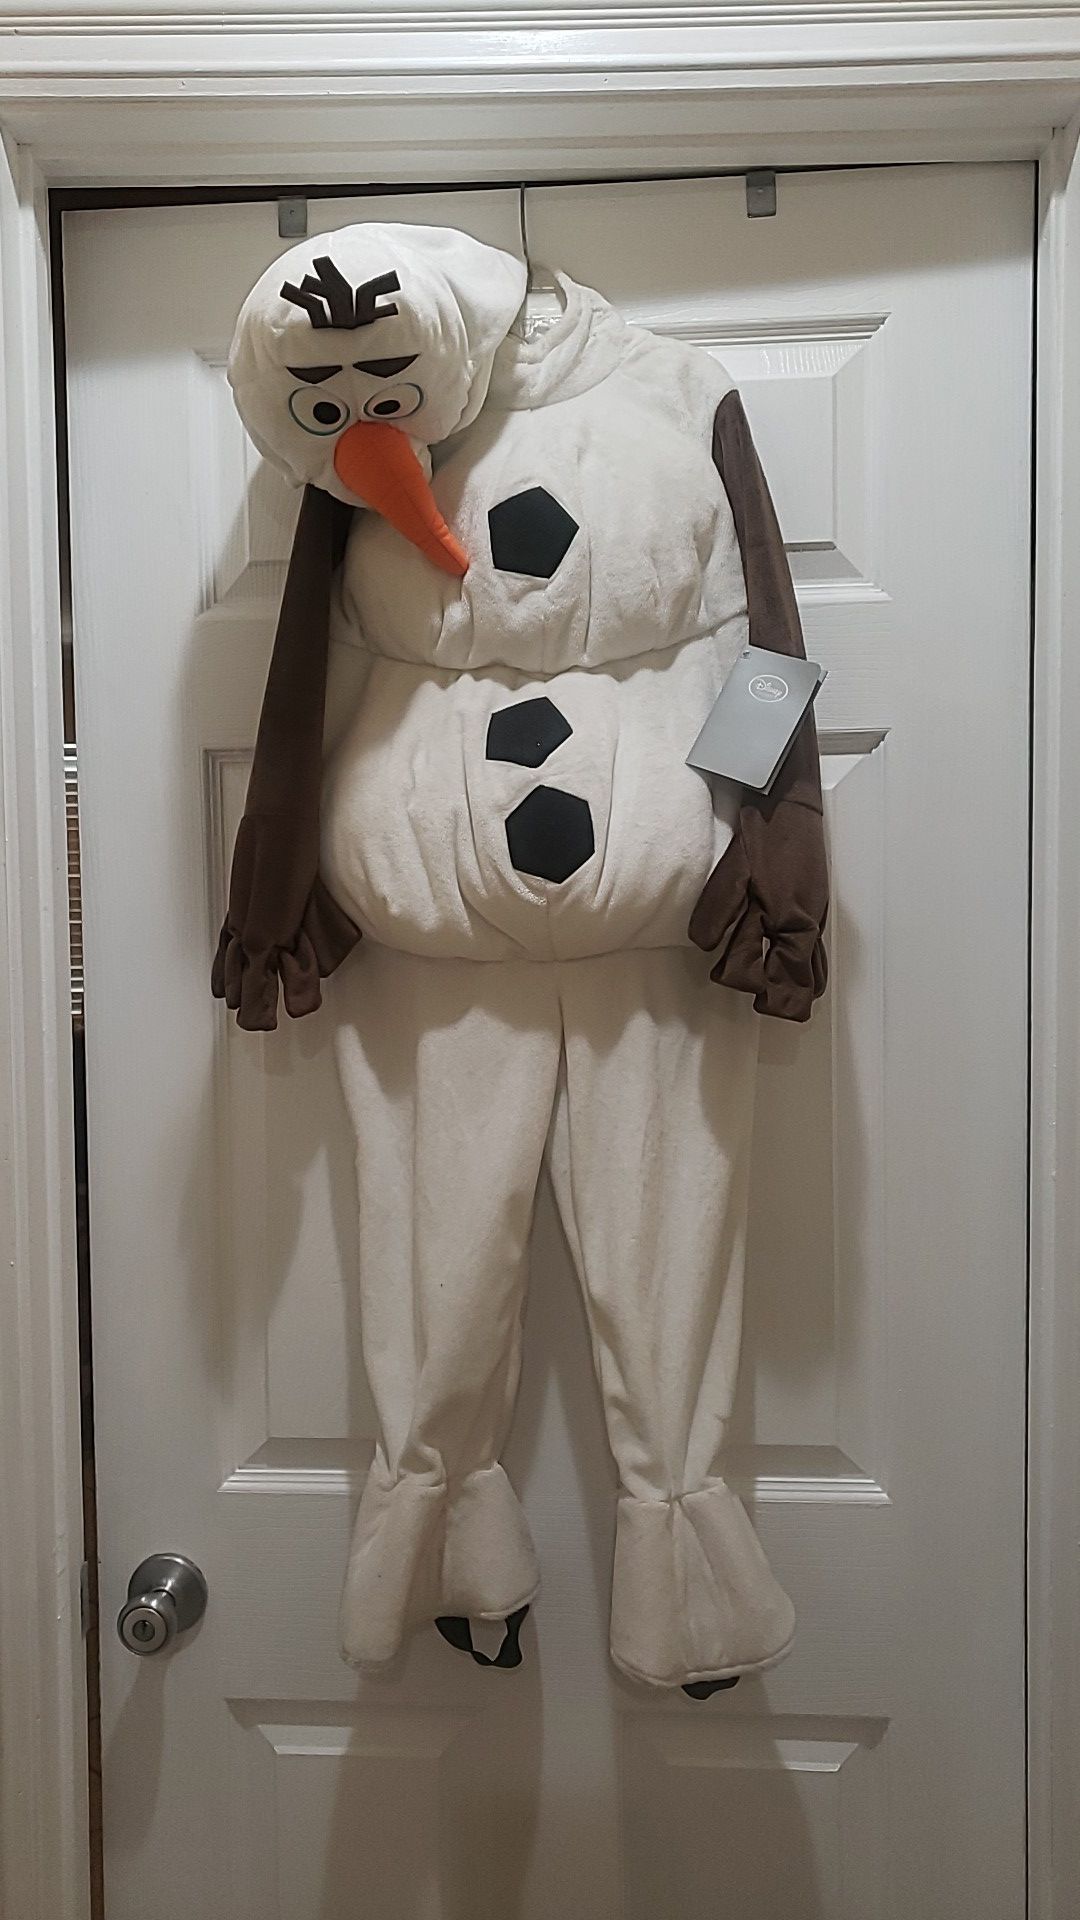 New original Frozen Olaf costume